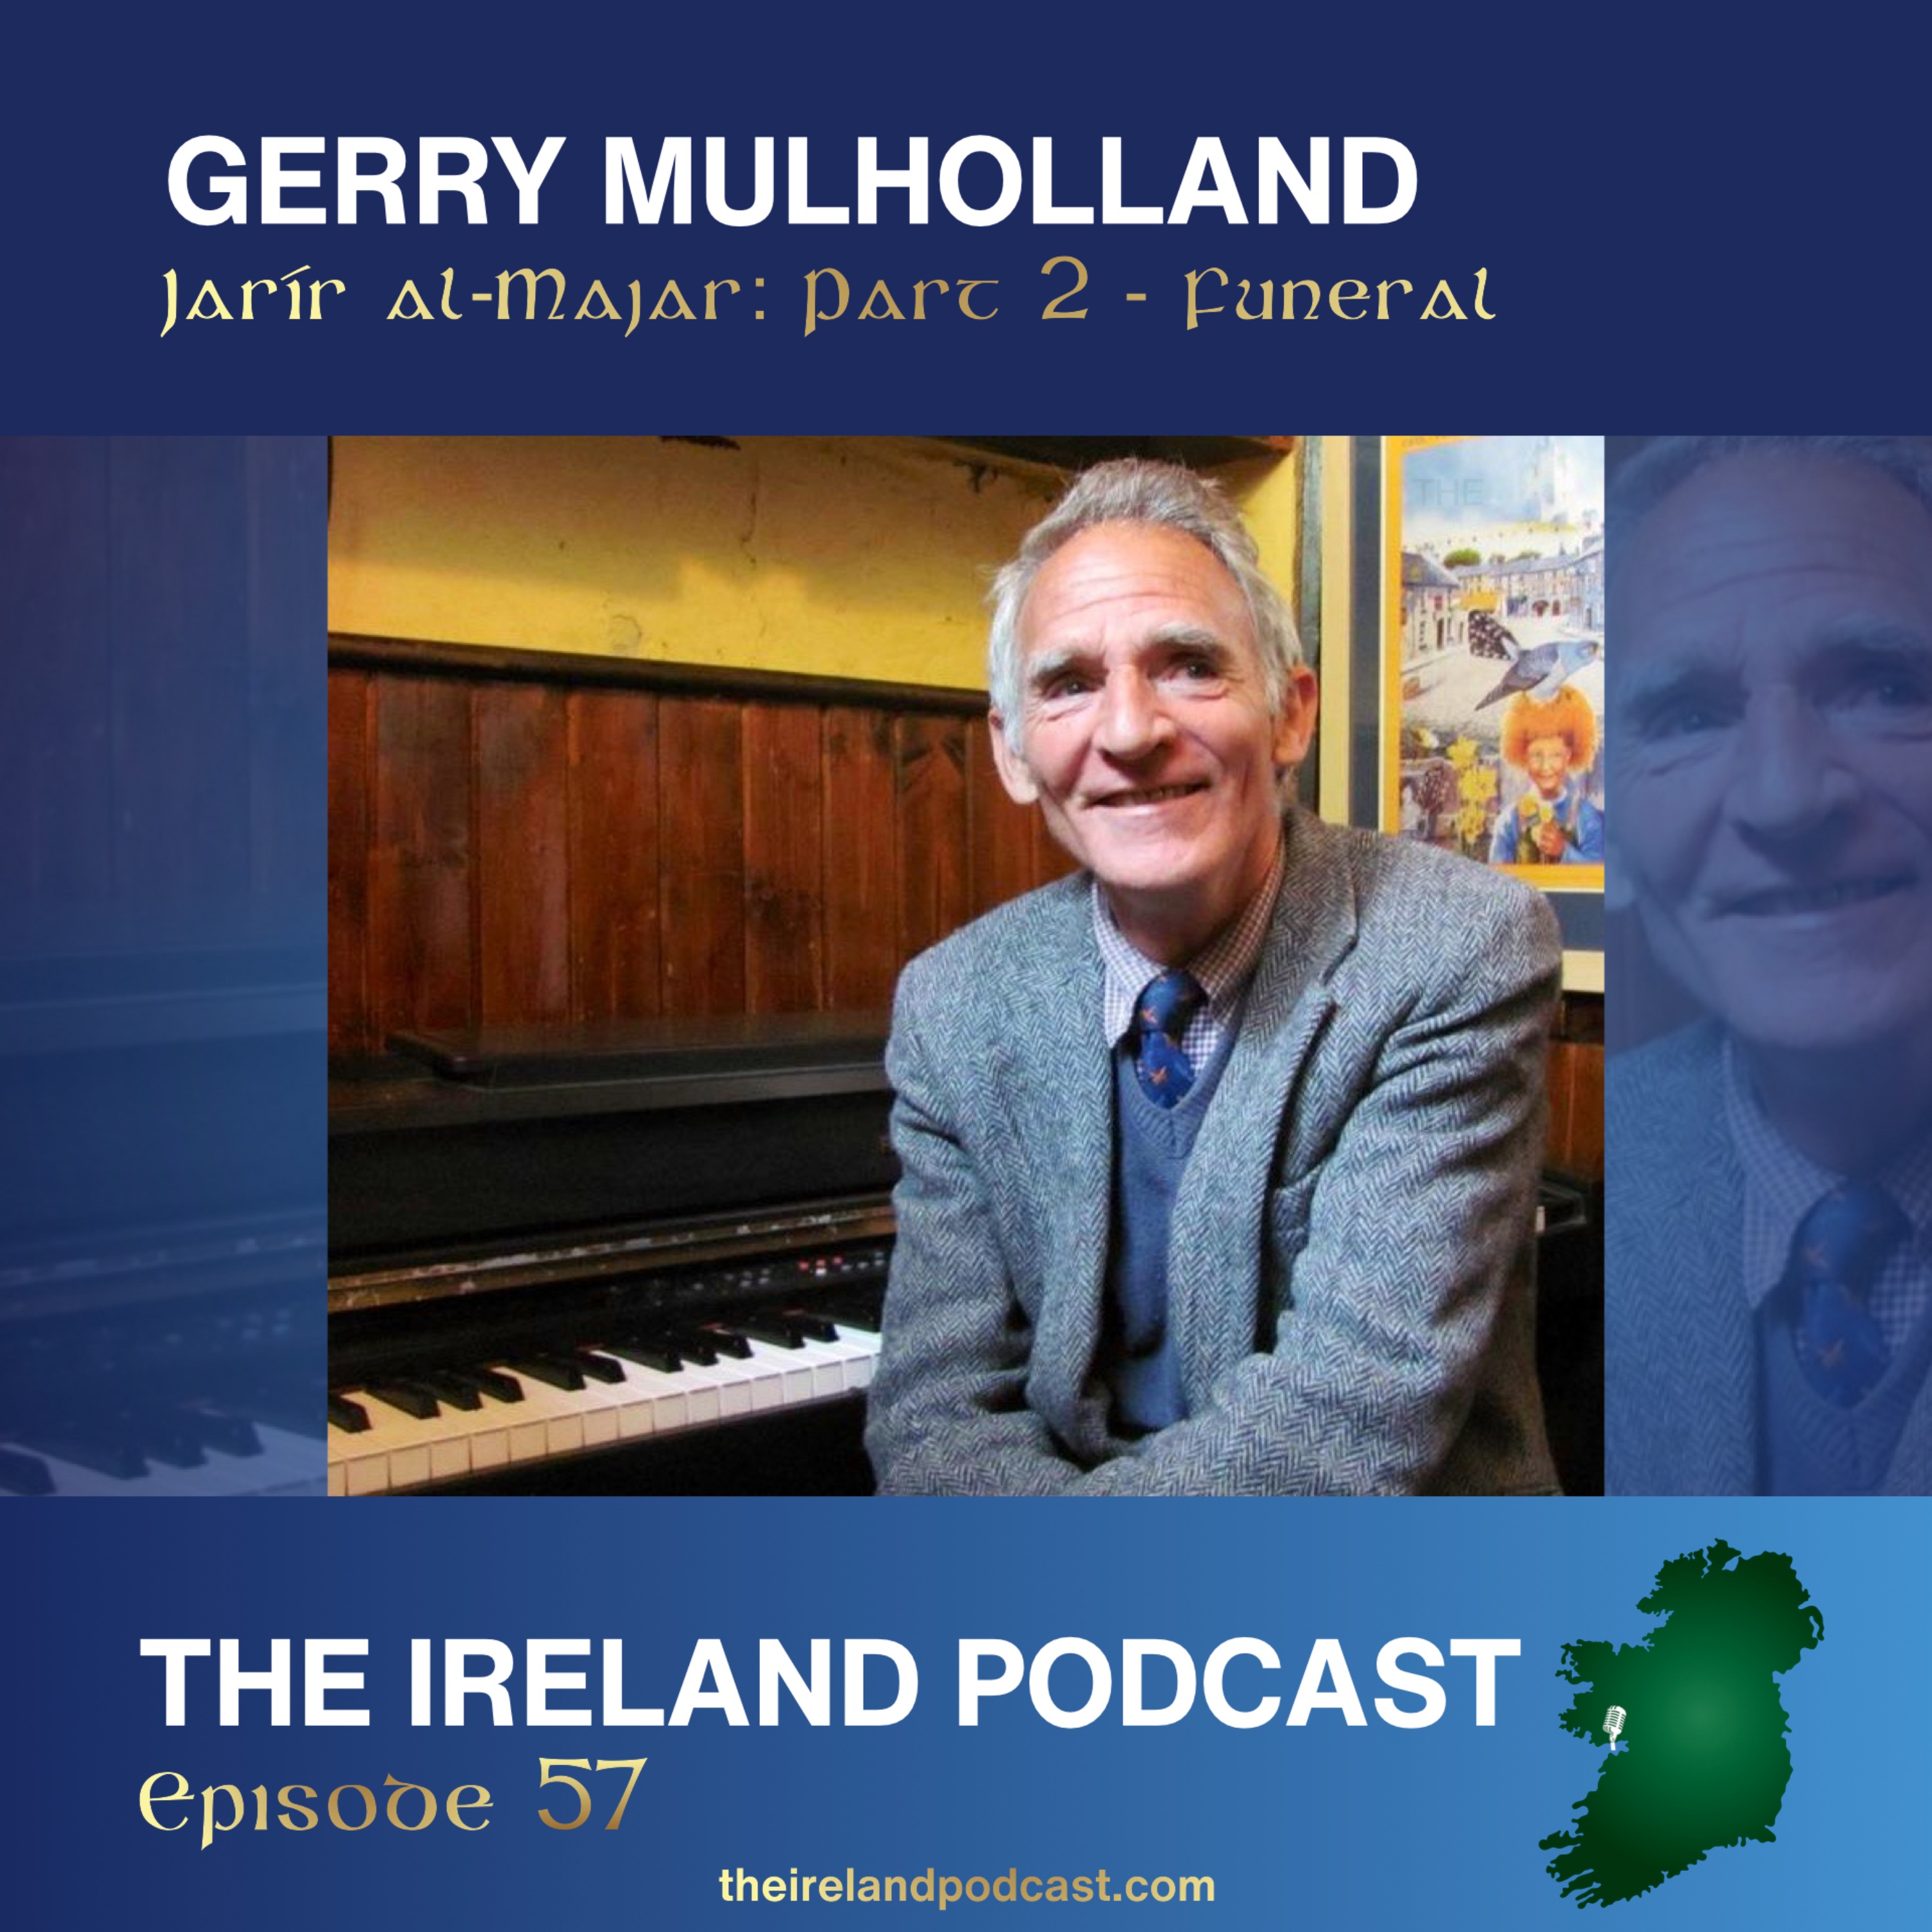 57. Gerard 'Gerry' Mulholland (Jarír al-Majar): Part 2 - Funeral